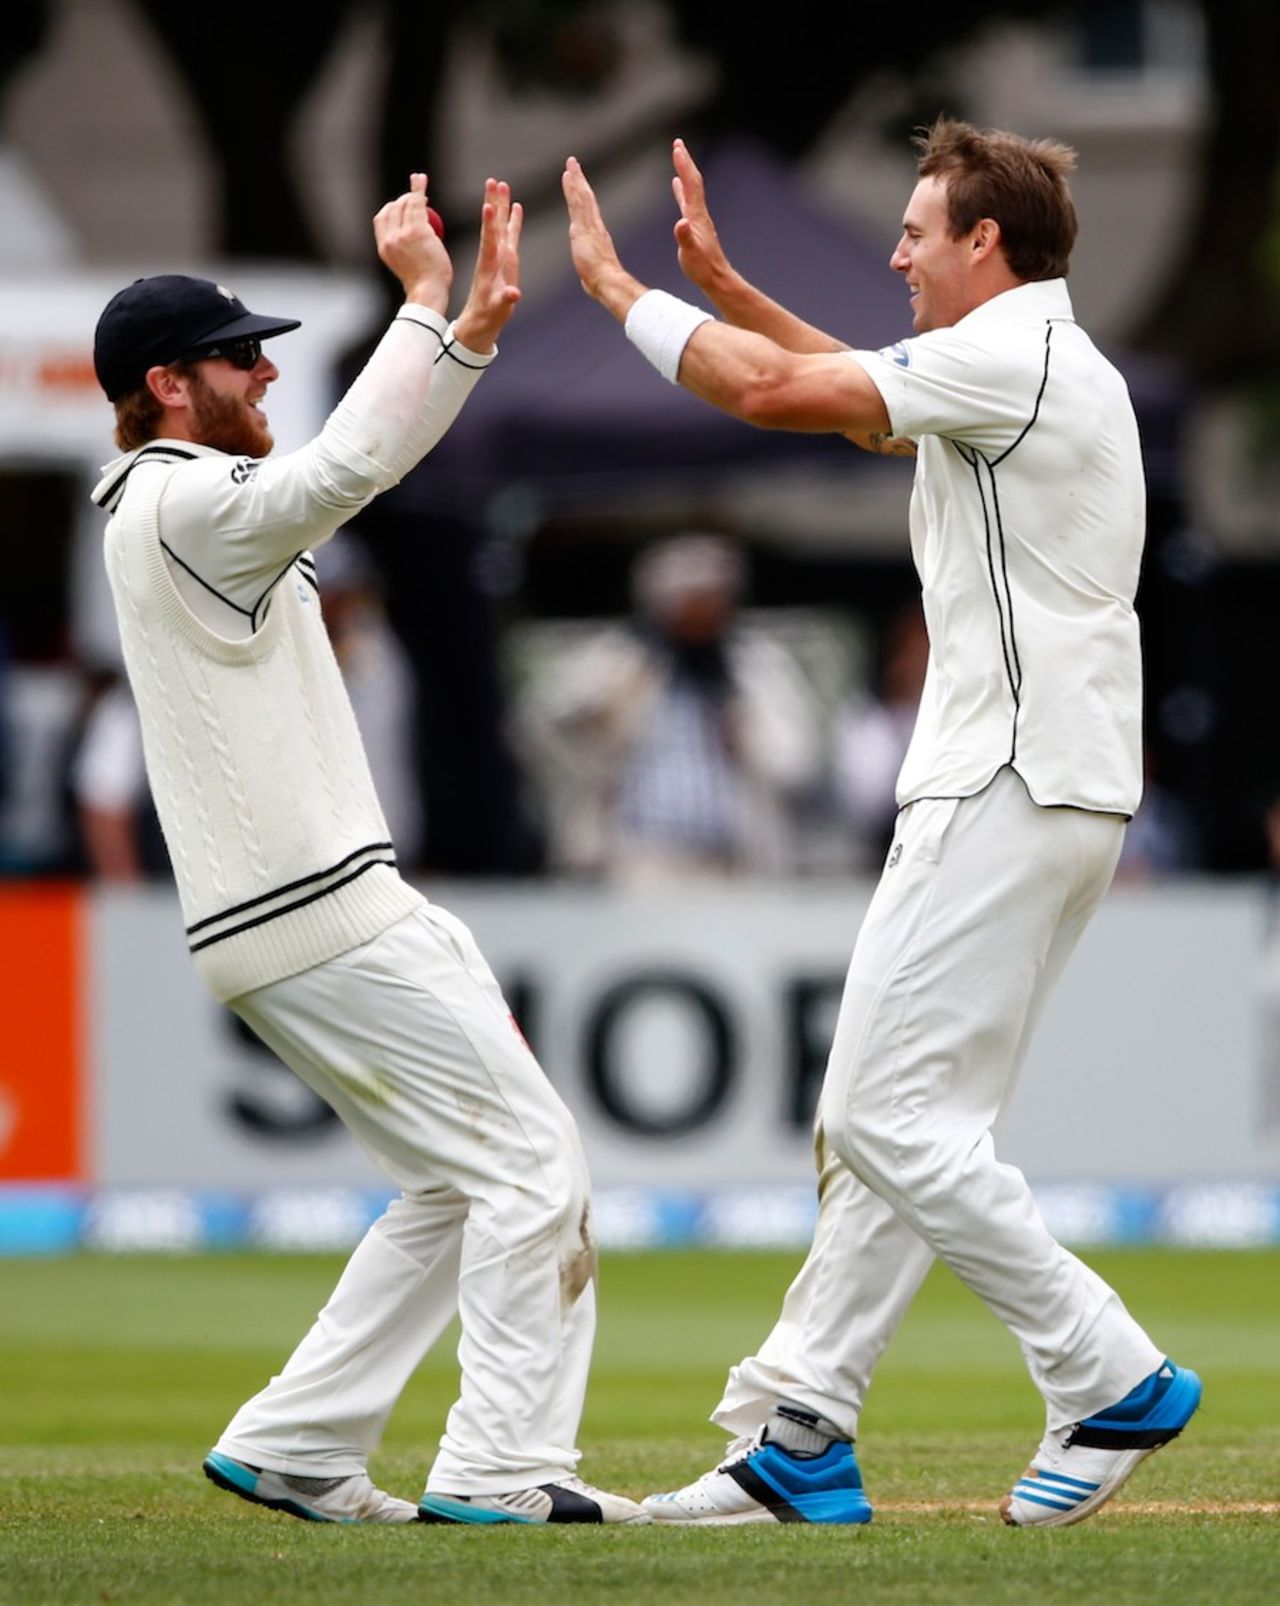 Doug Bracewell and Kane Williamson celebrate Angelo Mathews' wicket, New Zealand v Sri Lanka, 2nd Test, Wellington, 5th day, January 7, 2015